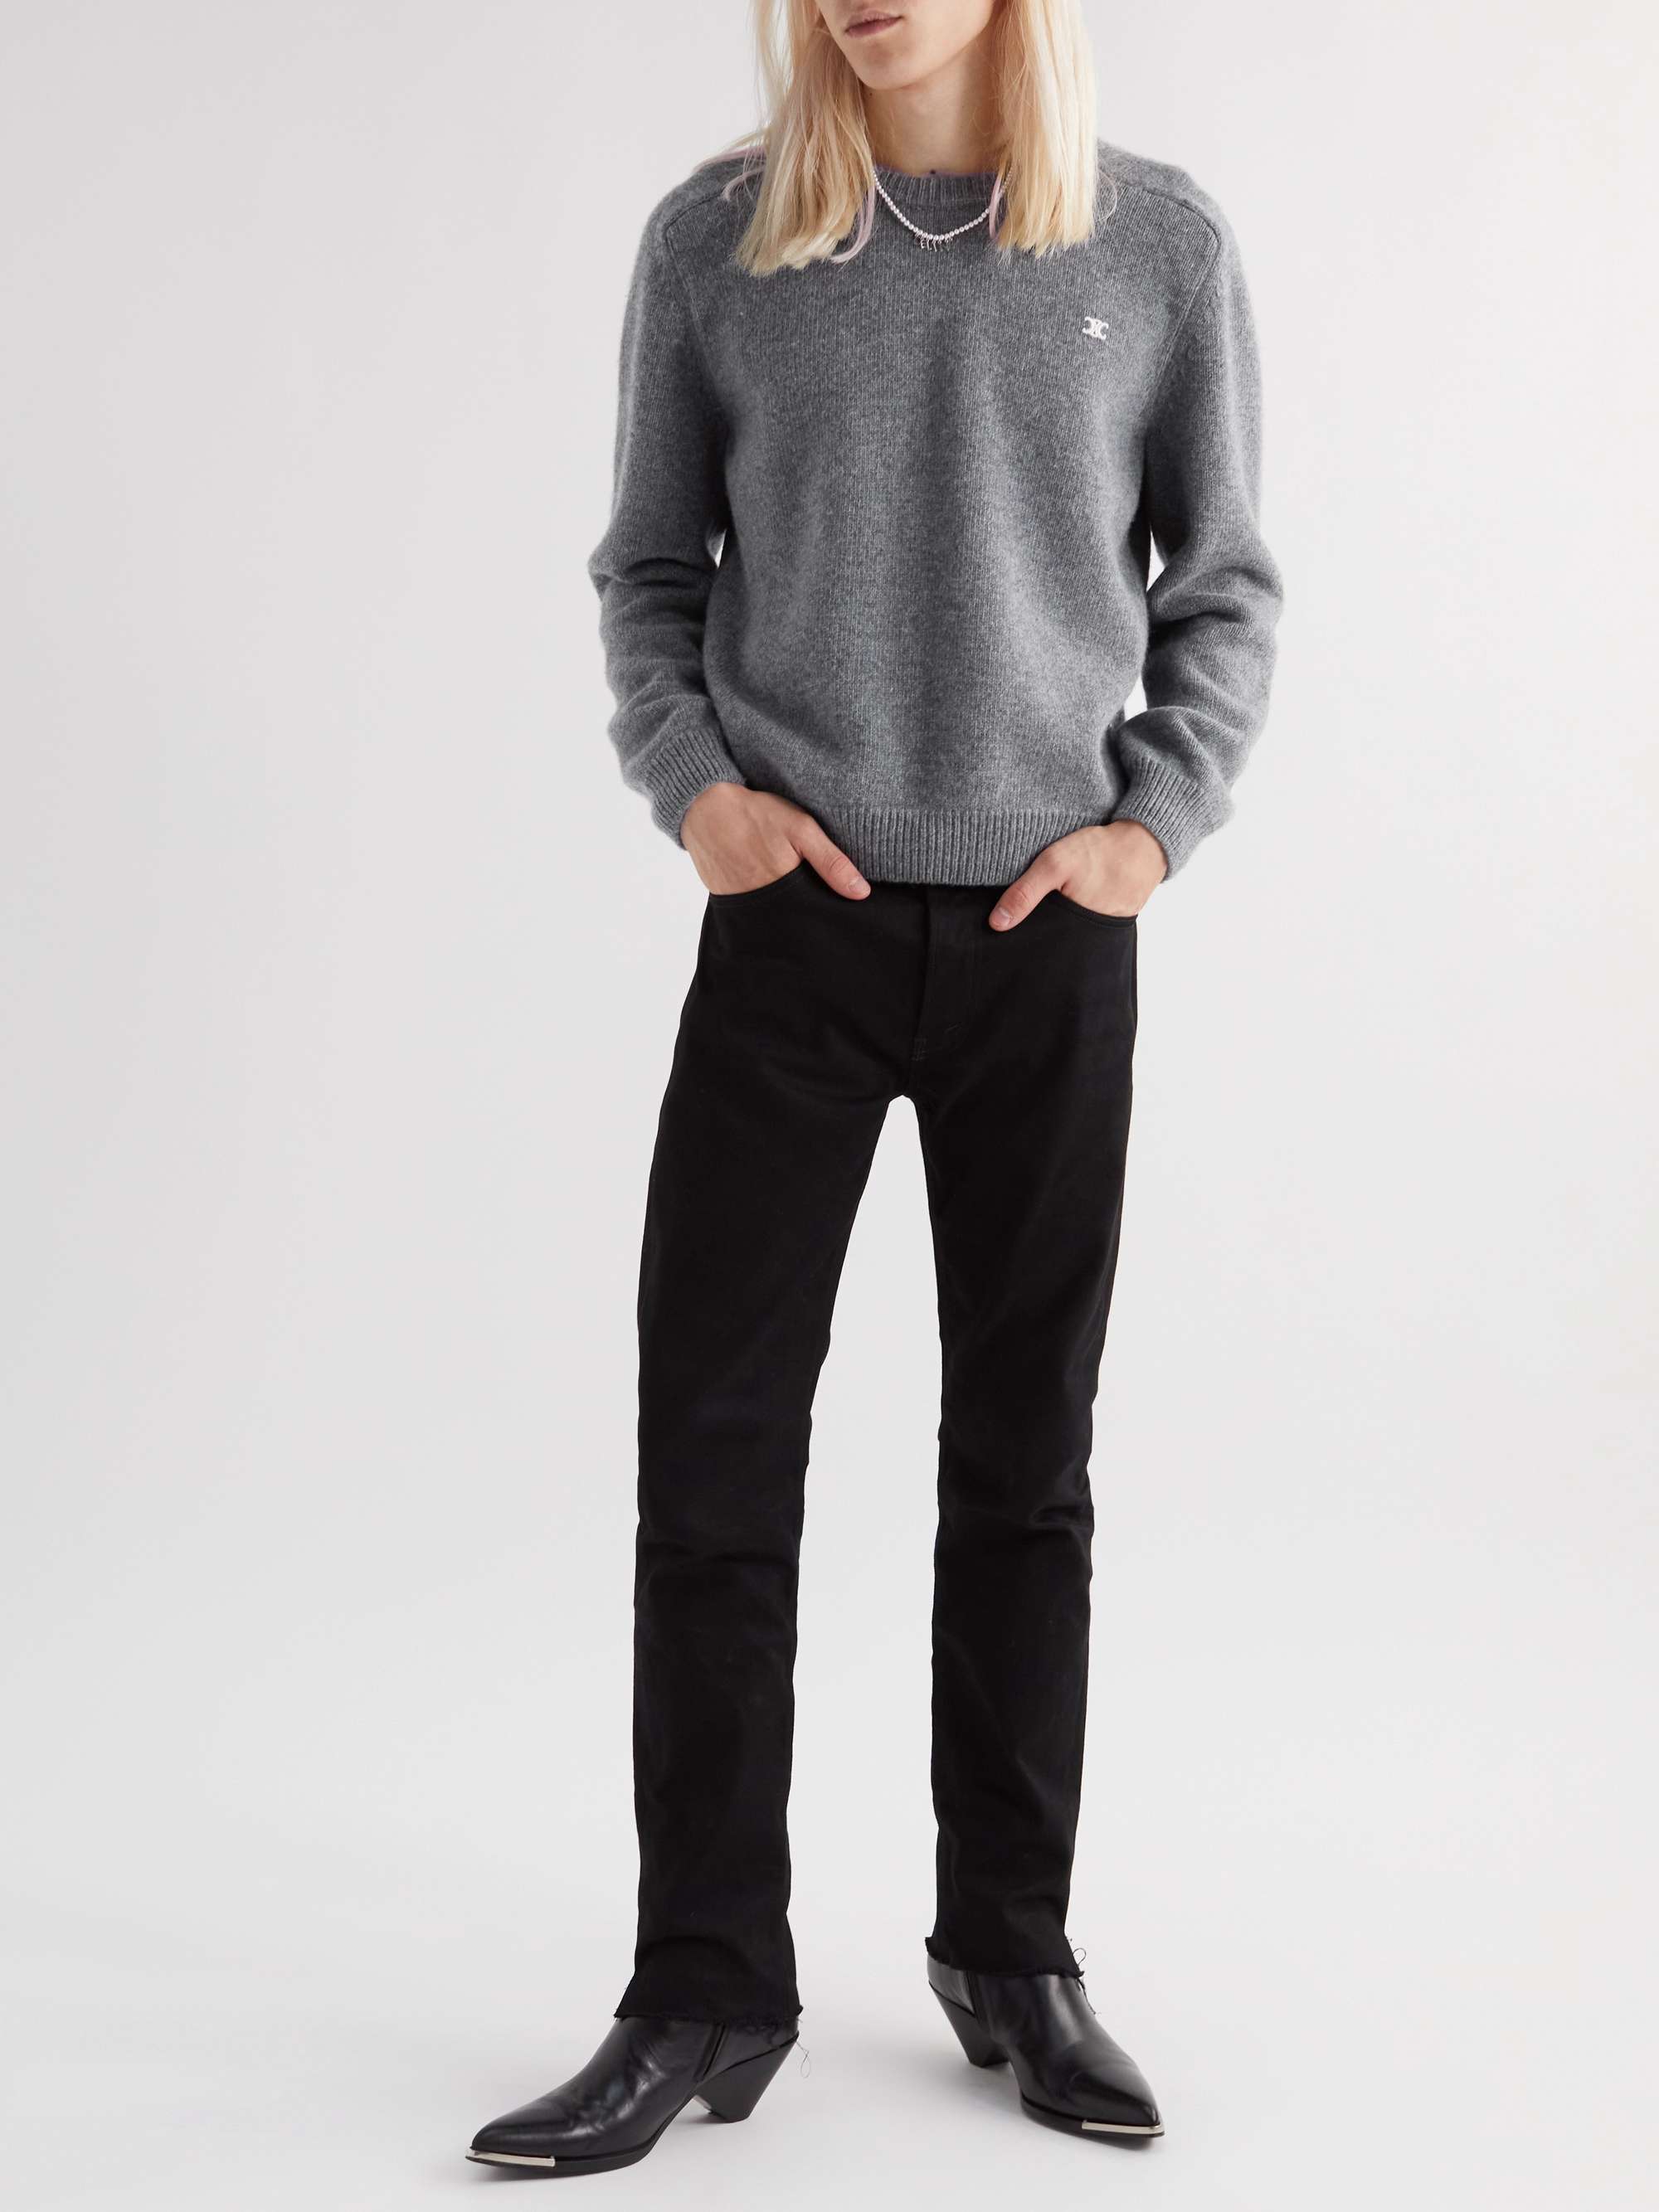 CELINE HOMME Logo-Embroidered Wool and Cashmere-Blend Sweater for Men | MR  PORTER